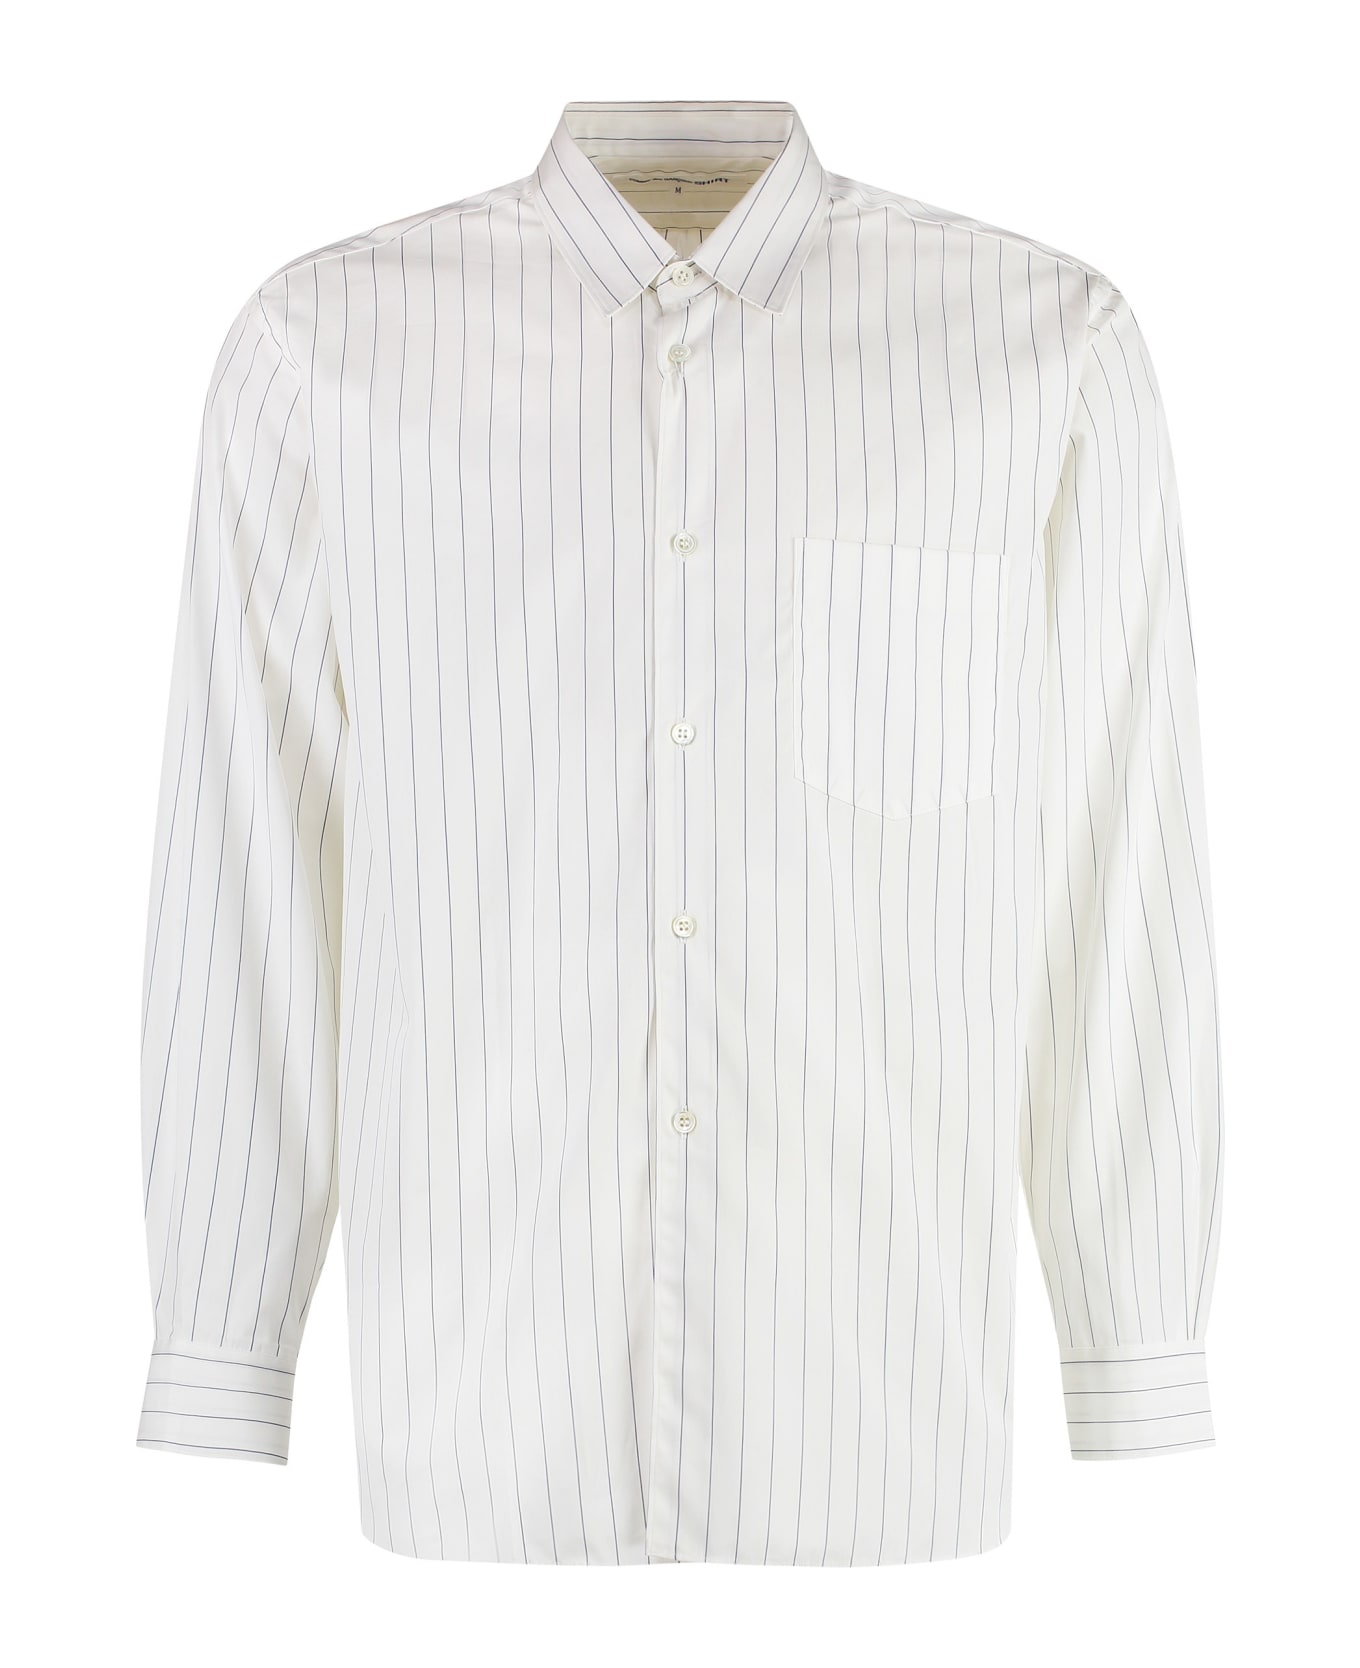 Comme des Garçons Shirt Striped Shirt - White